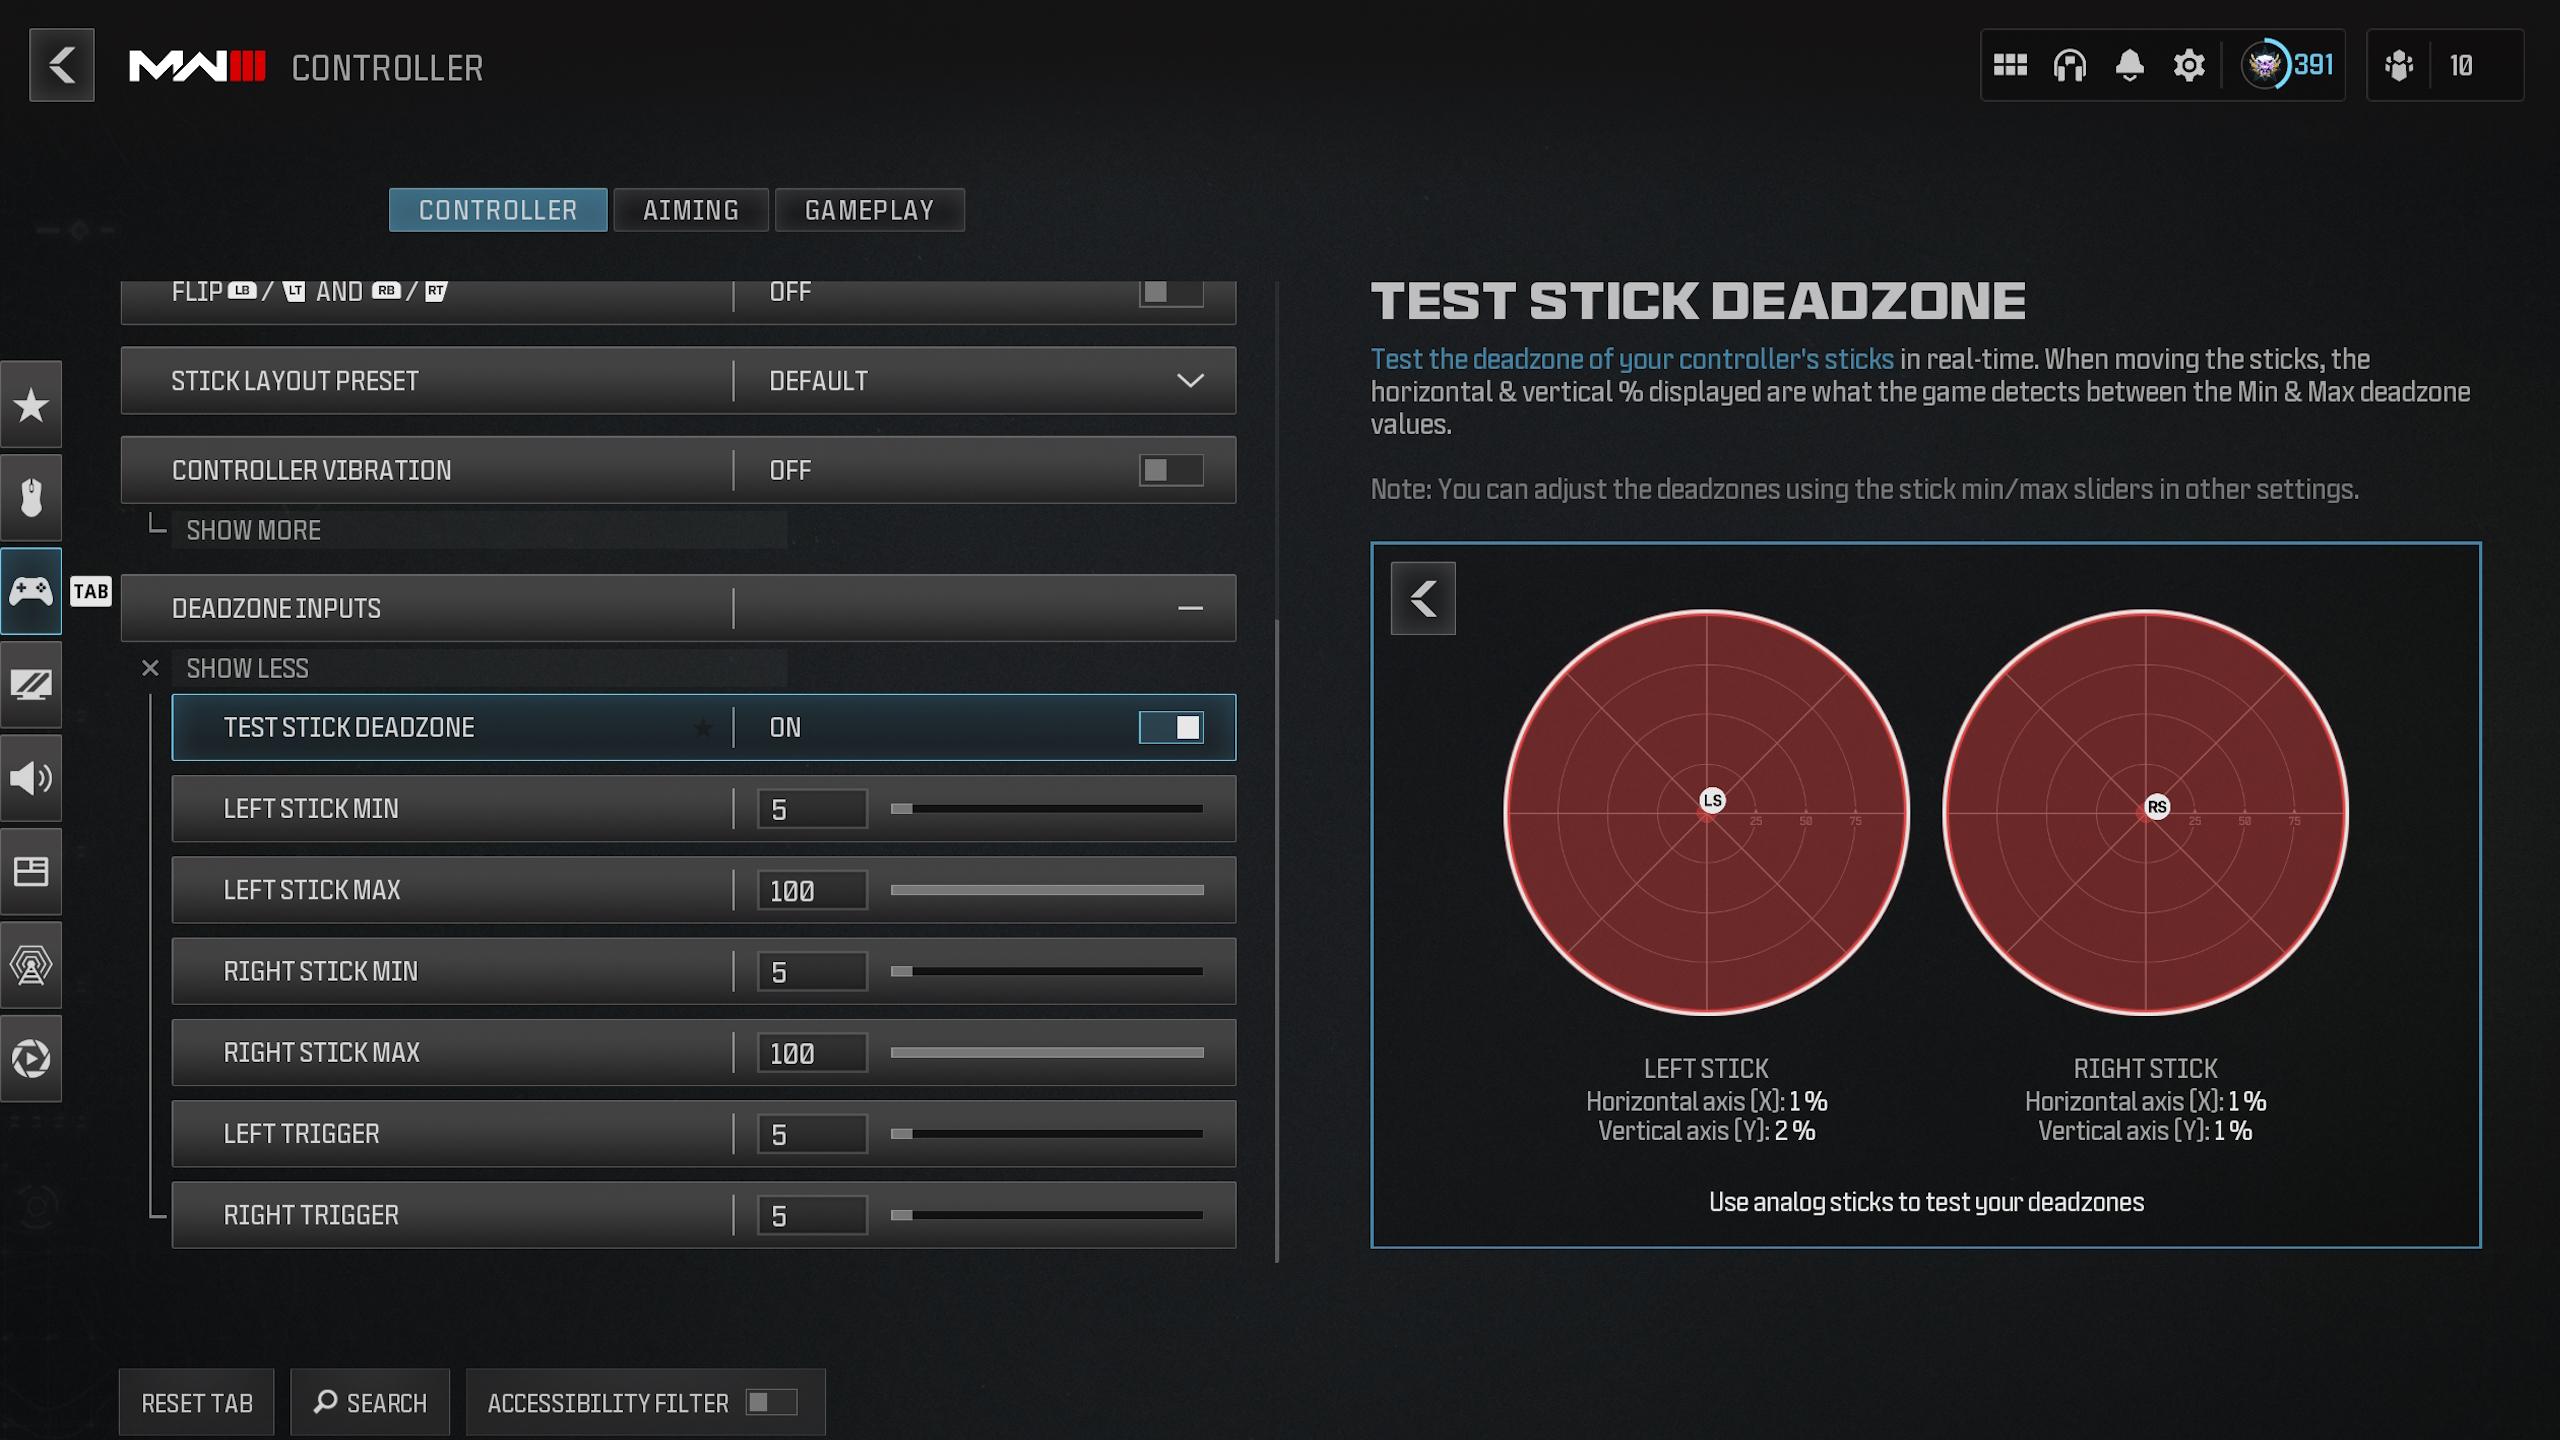 The best deadzone settings to use in Modern Warfare 3.